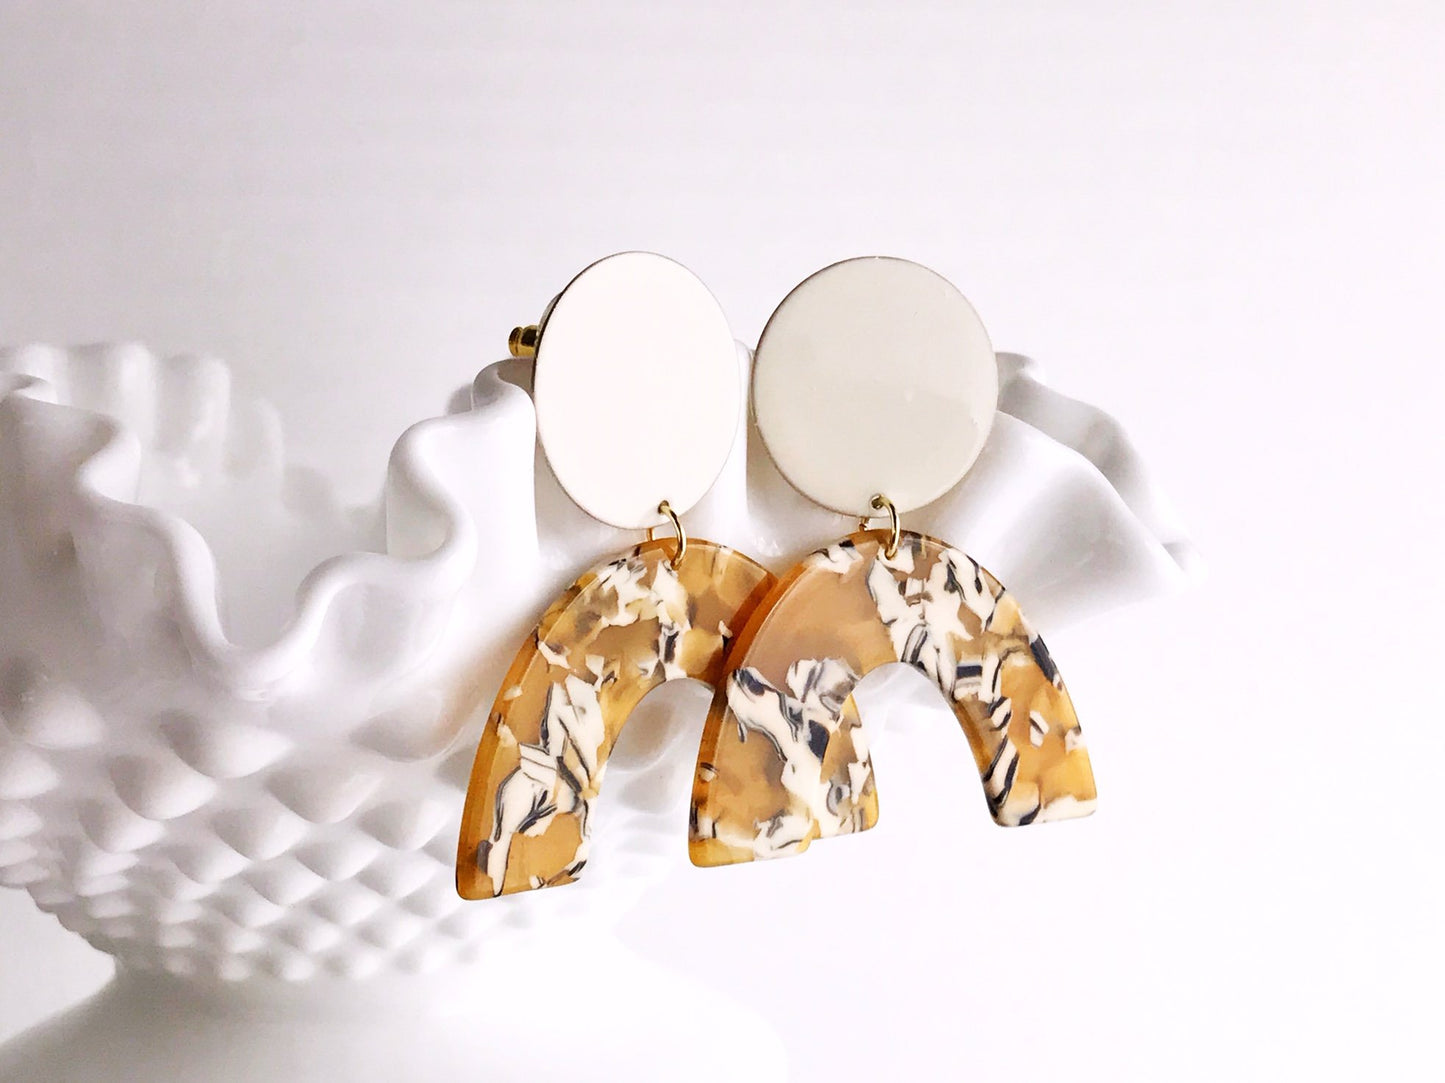 sydney earrings - ivory / mustard safari